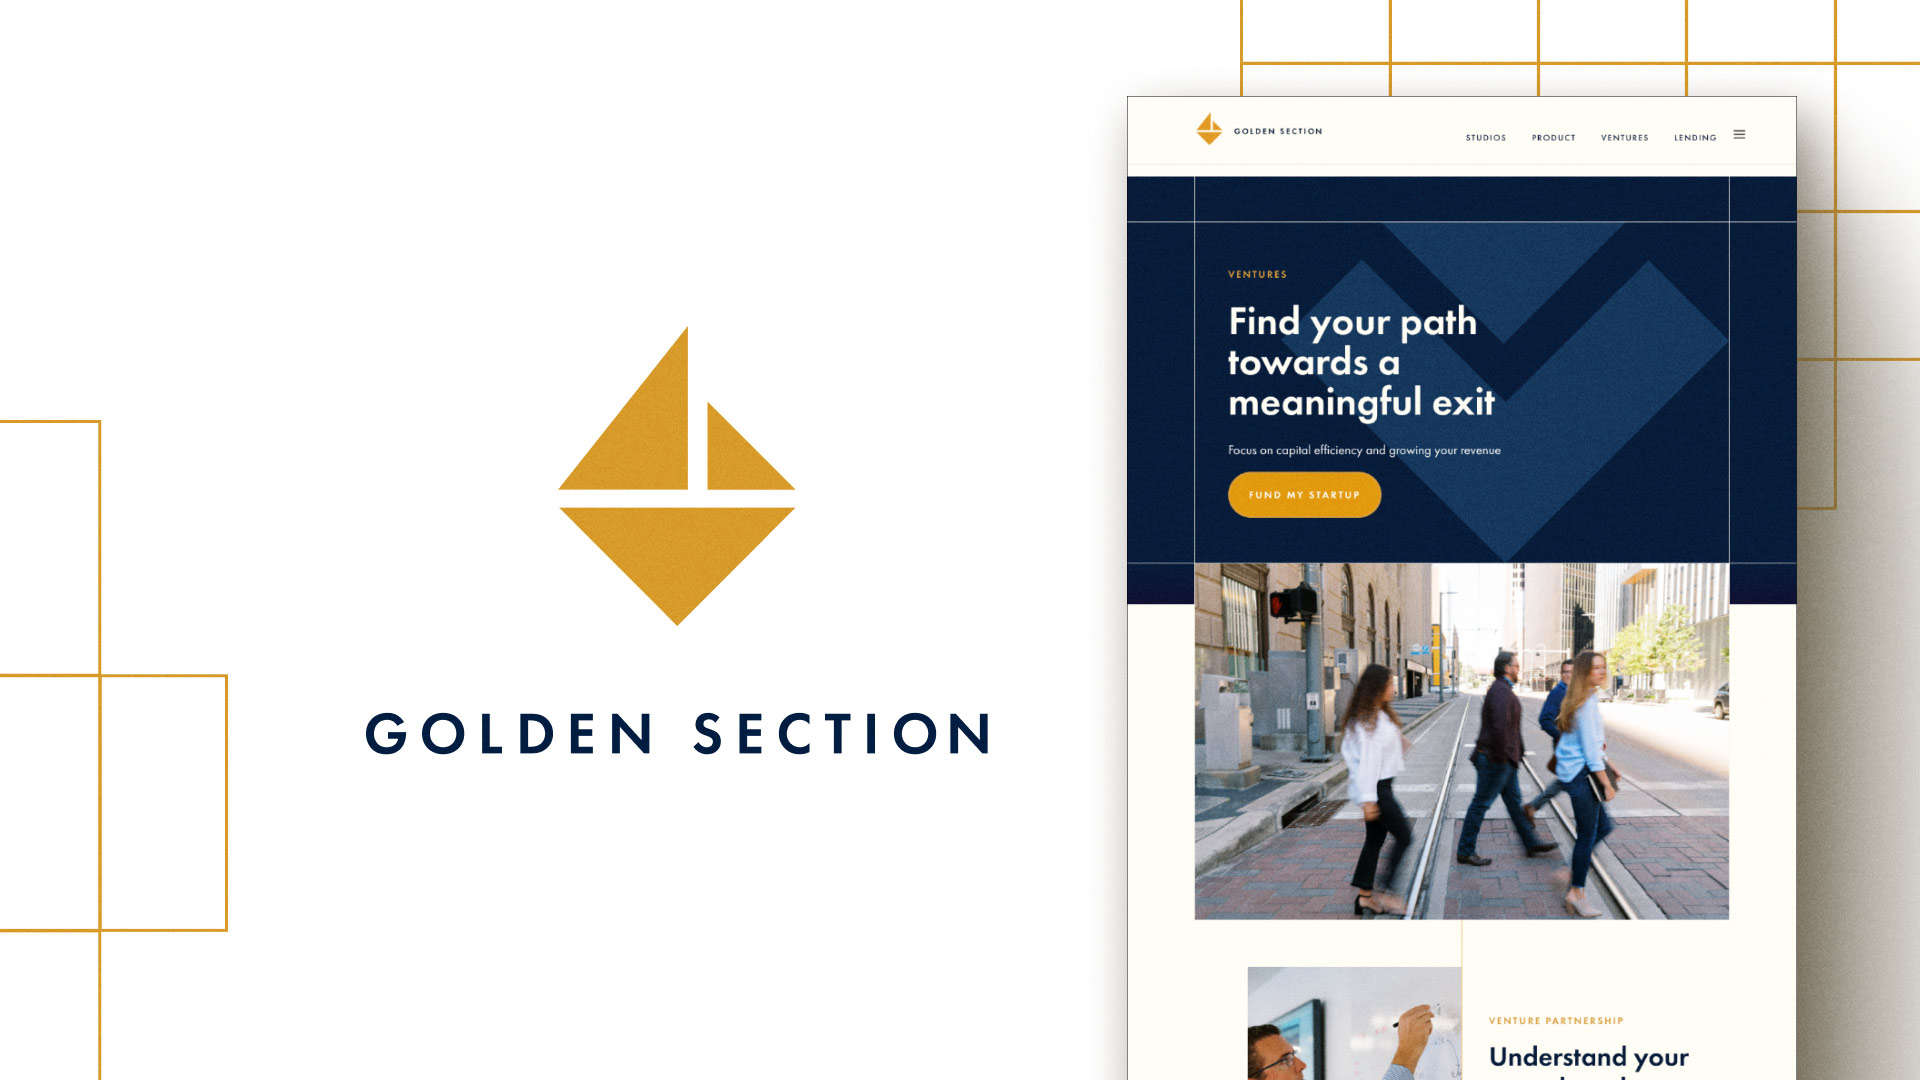 Golden Section logo next to a screenshot of the website